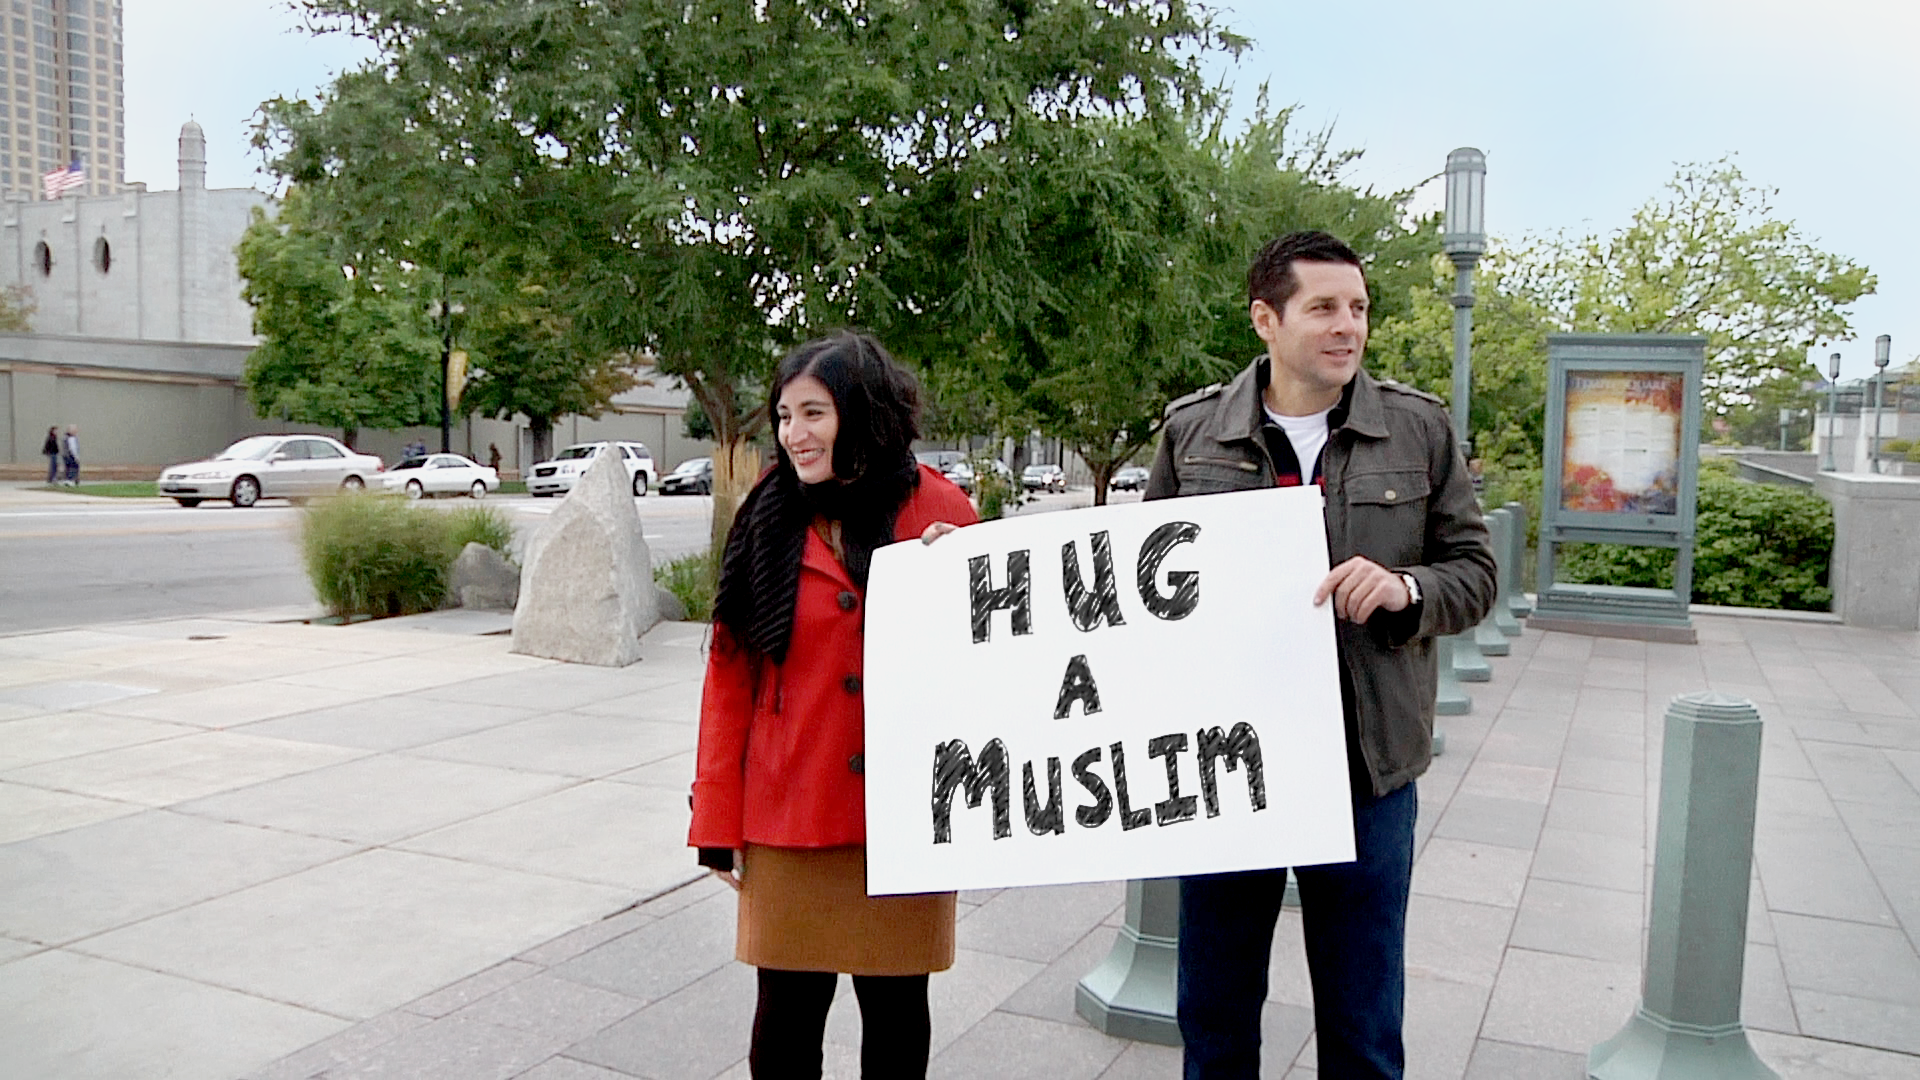  The ad campaign strives to combat negative perceptions of Muslims. (Courtesy: Negin Farsad and Dean Obeidallah)